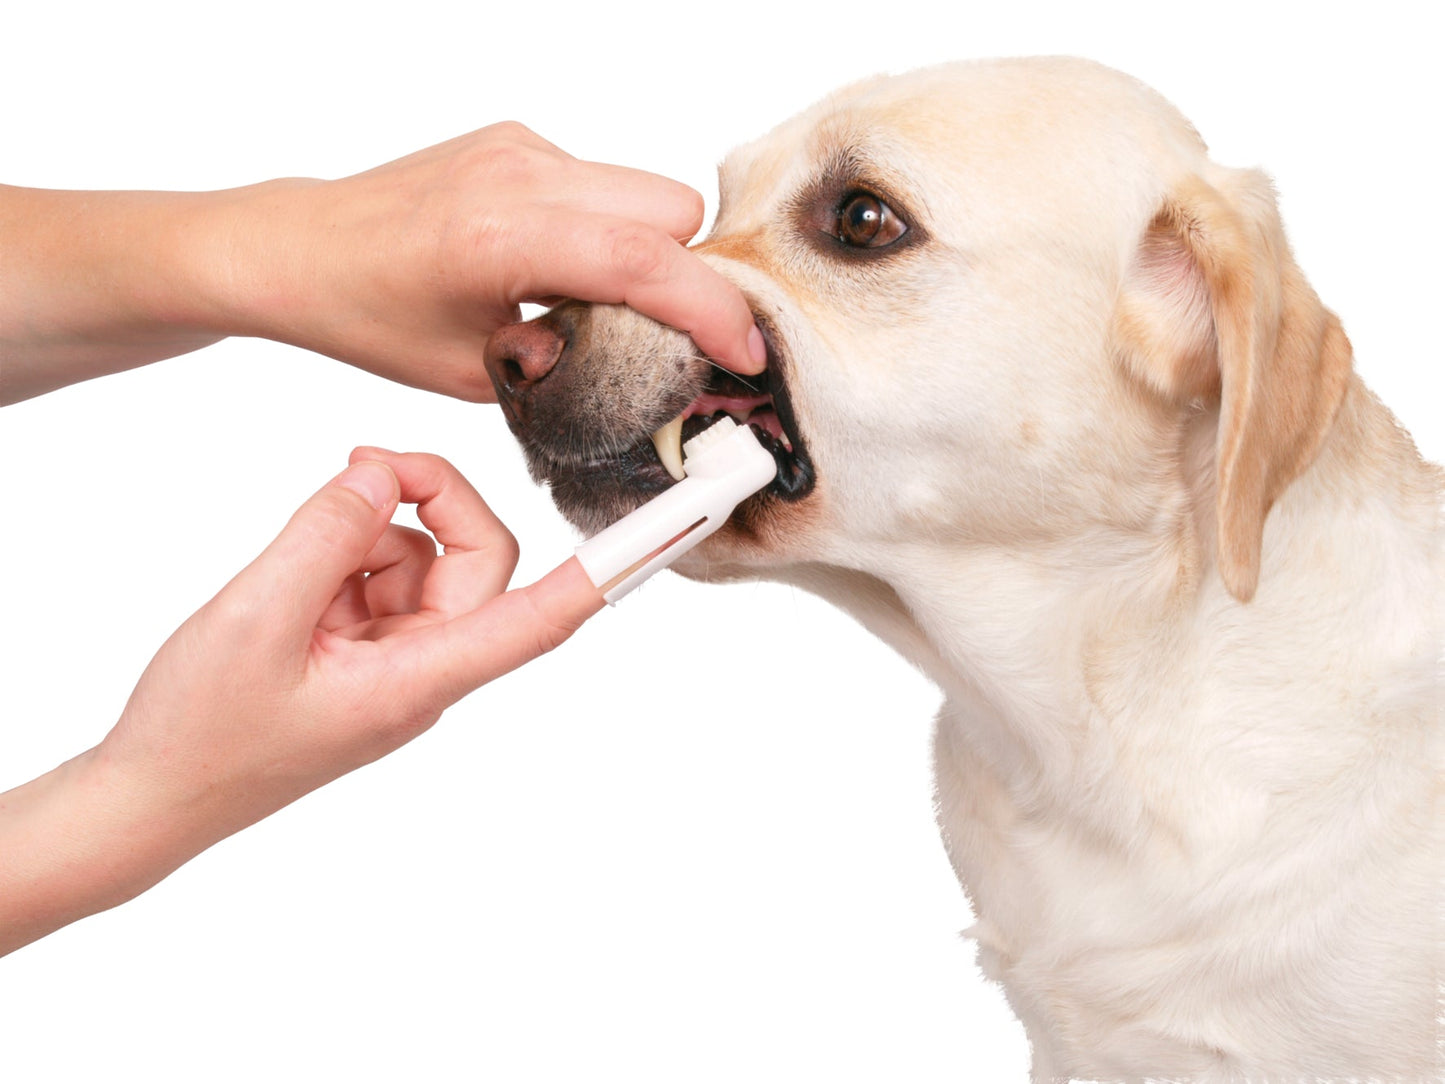 Trixie Dog Dental Hygiene Kit for dogs - Petsgool Online